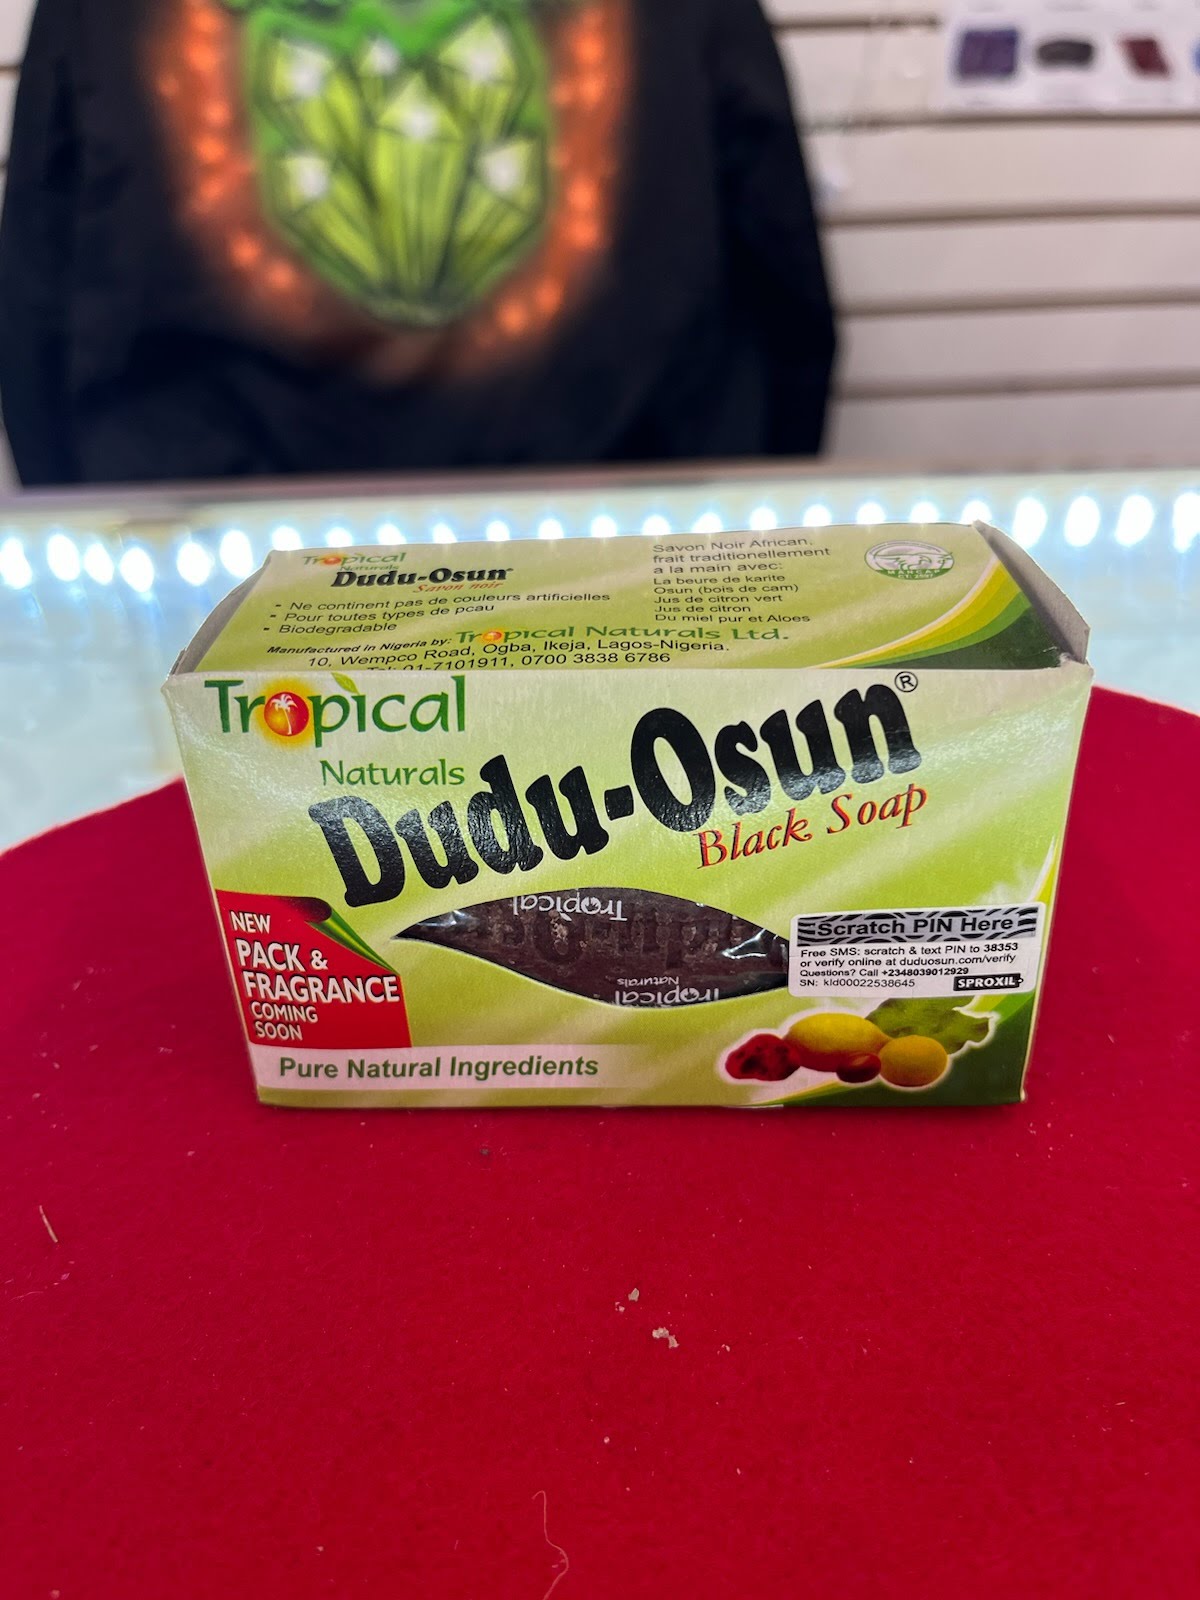 A box of tropical dudu-osun fruit soup